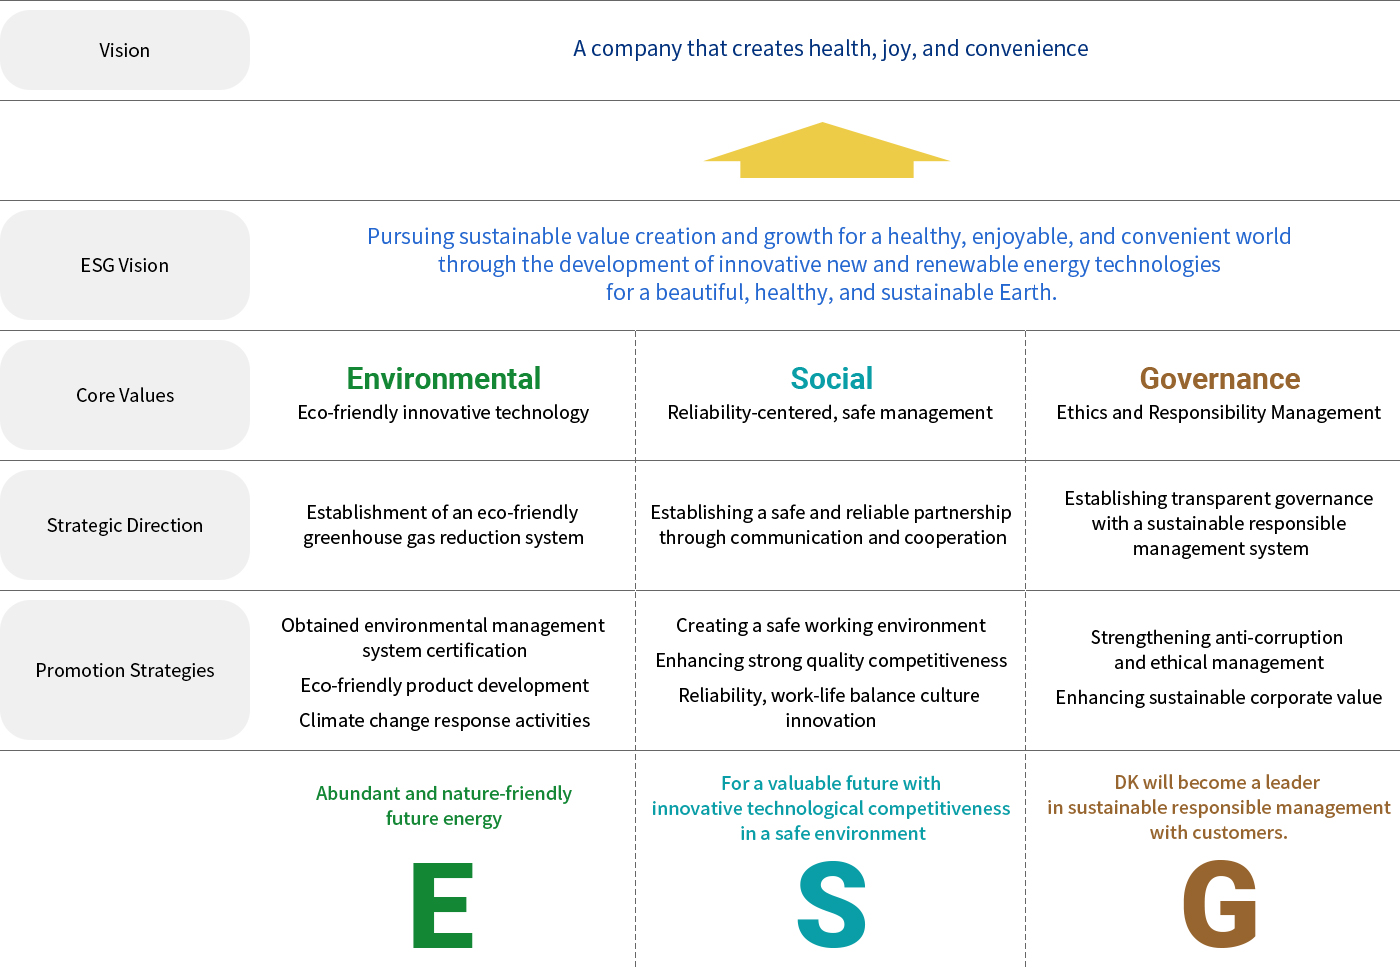 ESG Vision, Core Values, Strategic Direction, Promotion Strategies